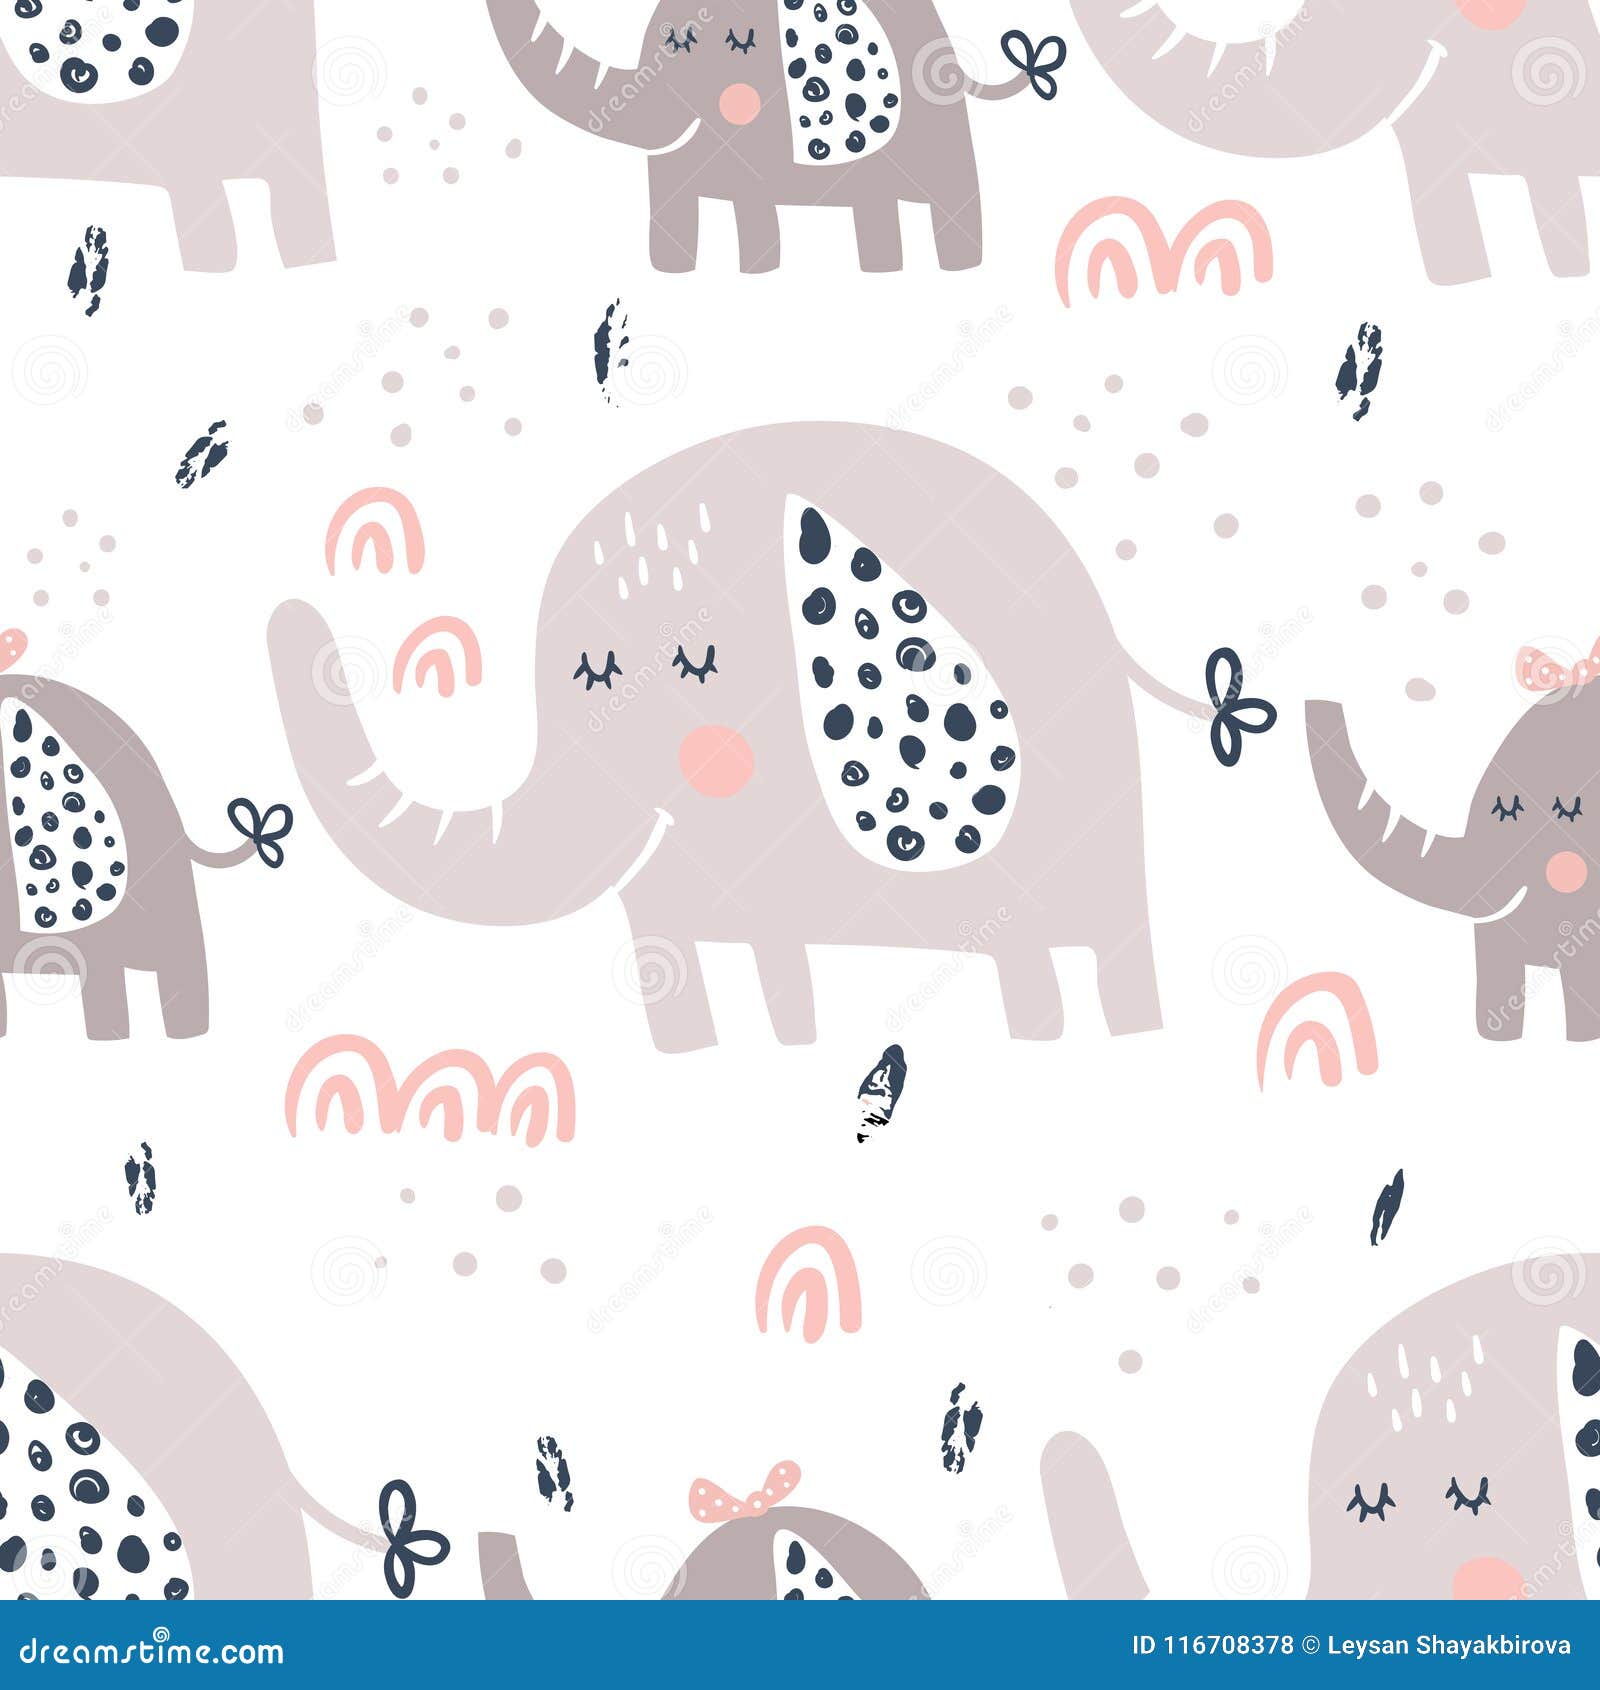 Elephants family pattern stock vector. Illustration of cheerful - 116708378